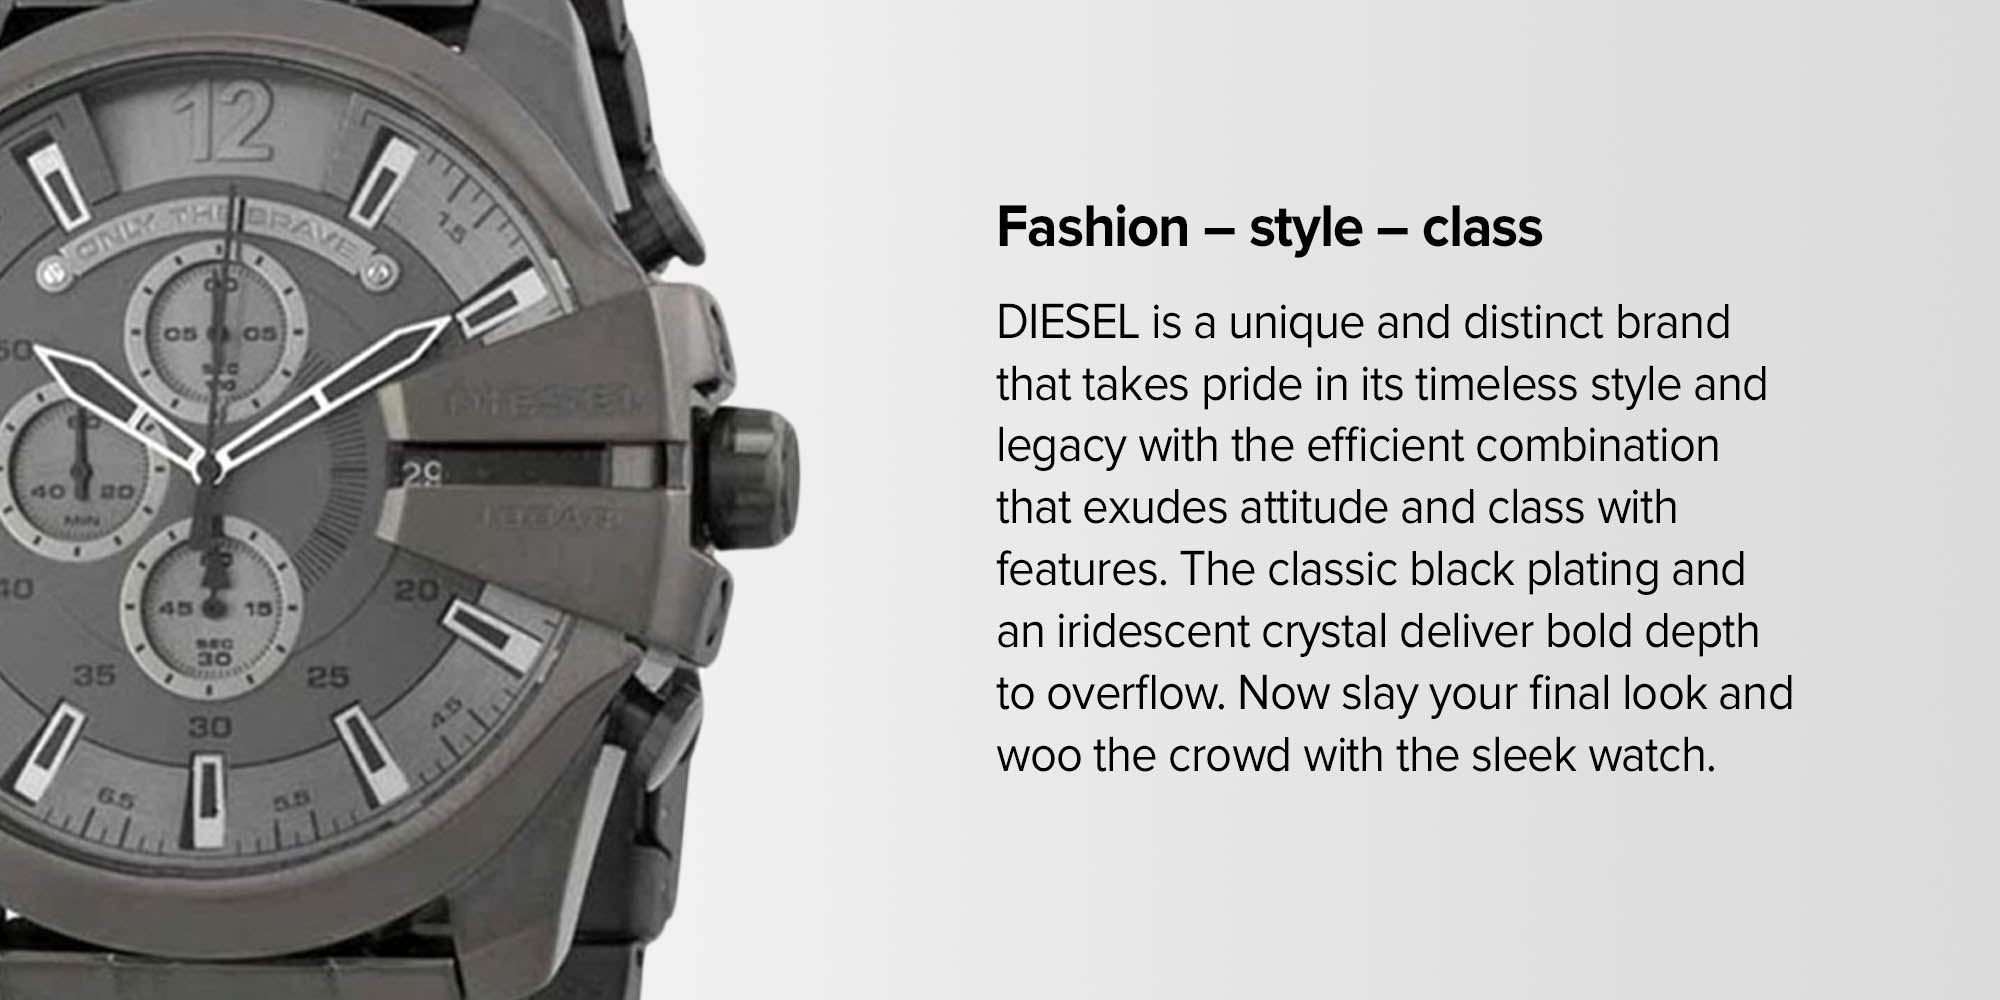 Men's Mega Chief Round Shape Stainless Steel Chronograph Wrist Watch 49 mm - Grey - DZ4282